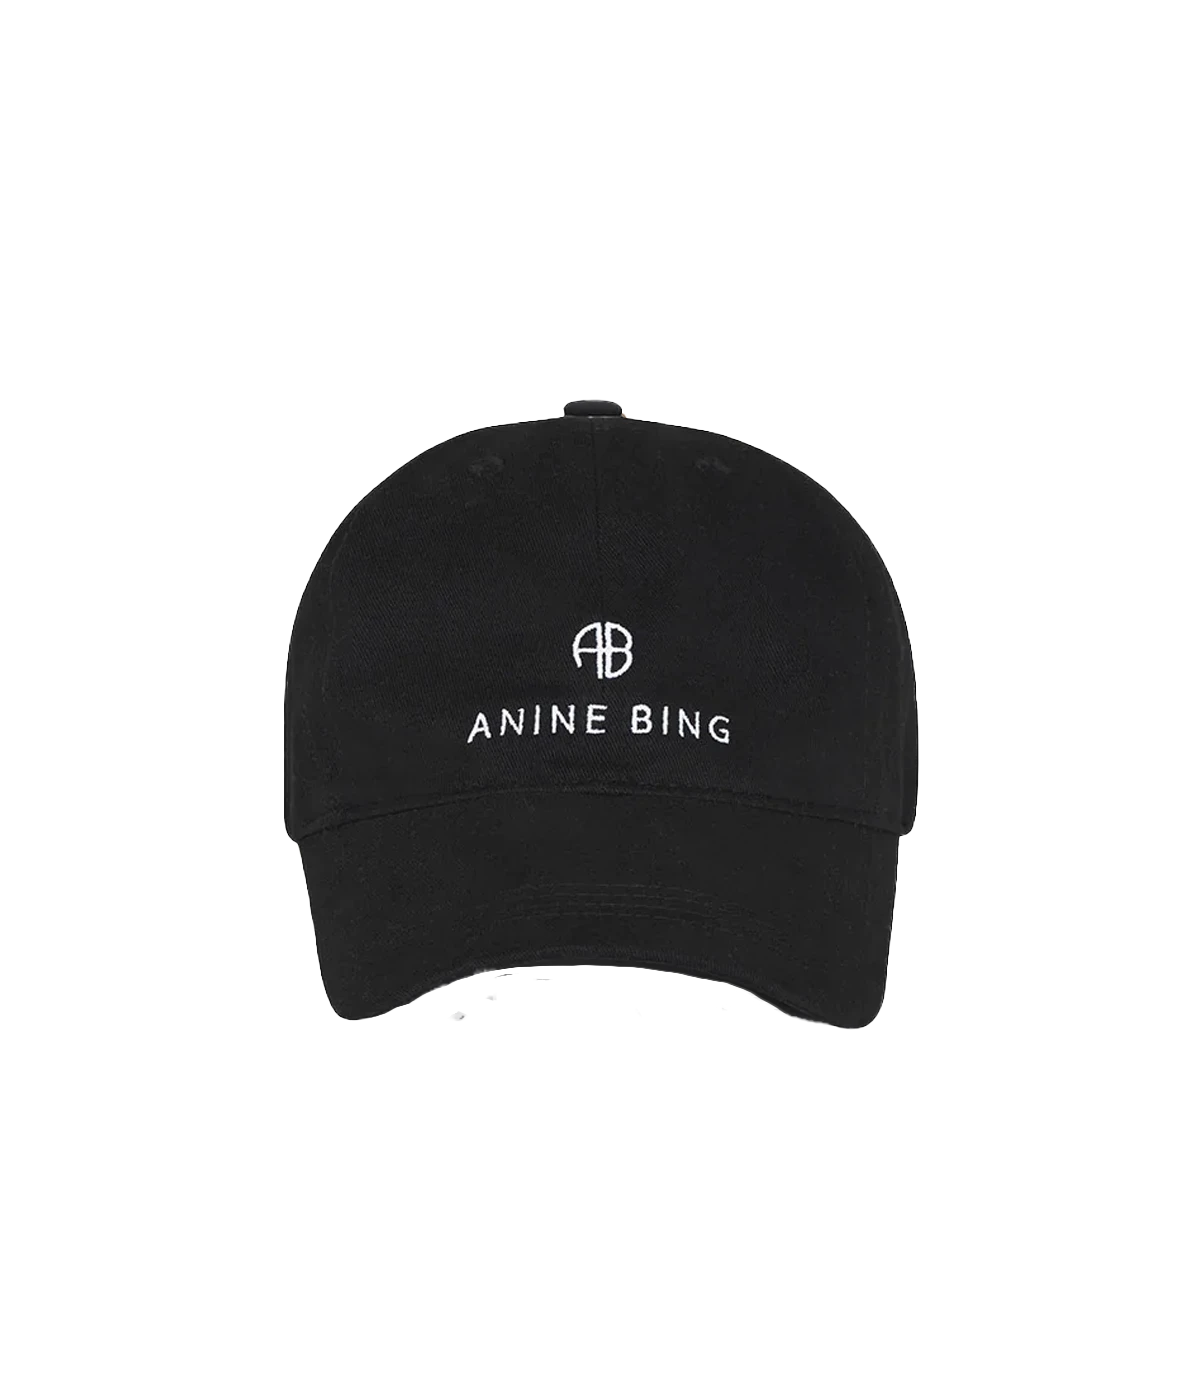 Jeremy Anine Bing Baseball Cap in Black